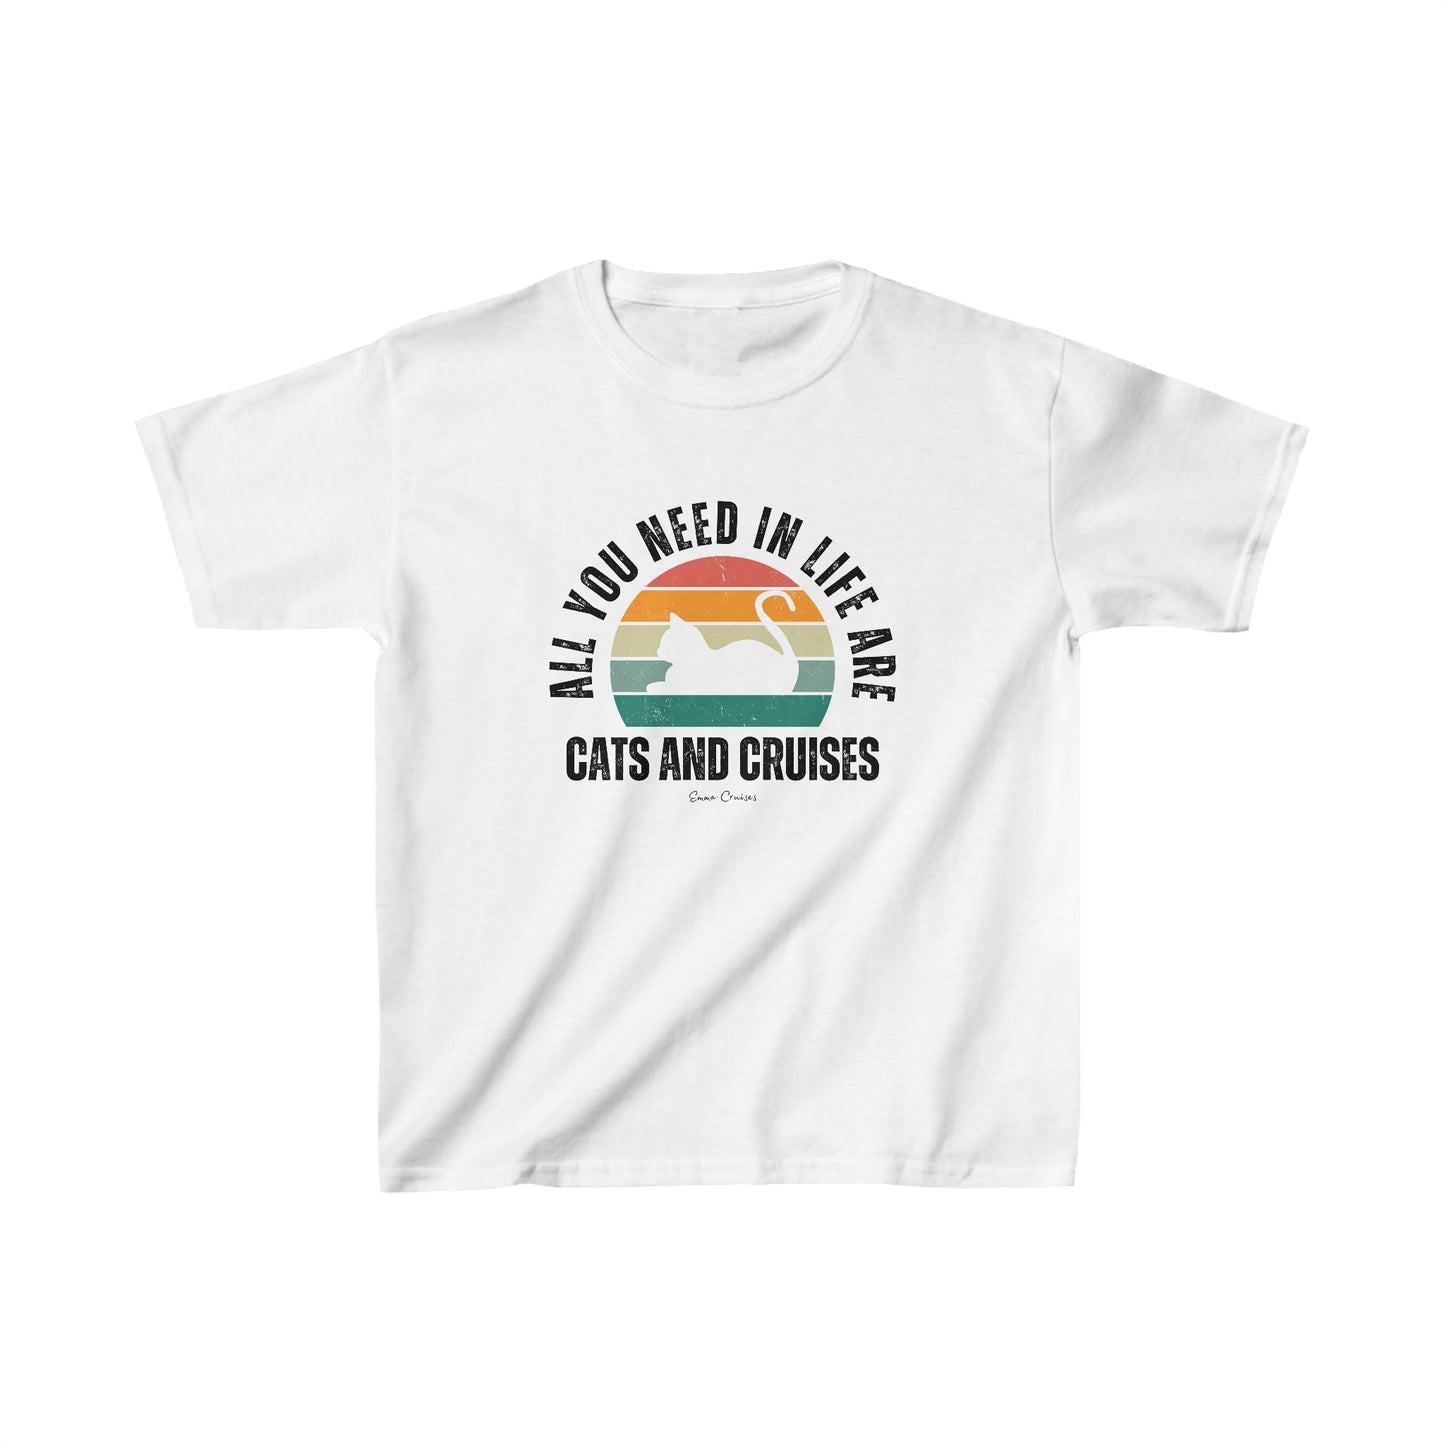 Cats and Cruises - Kids UNISEX T-Shirt